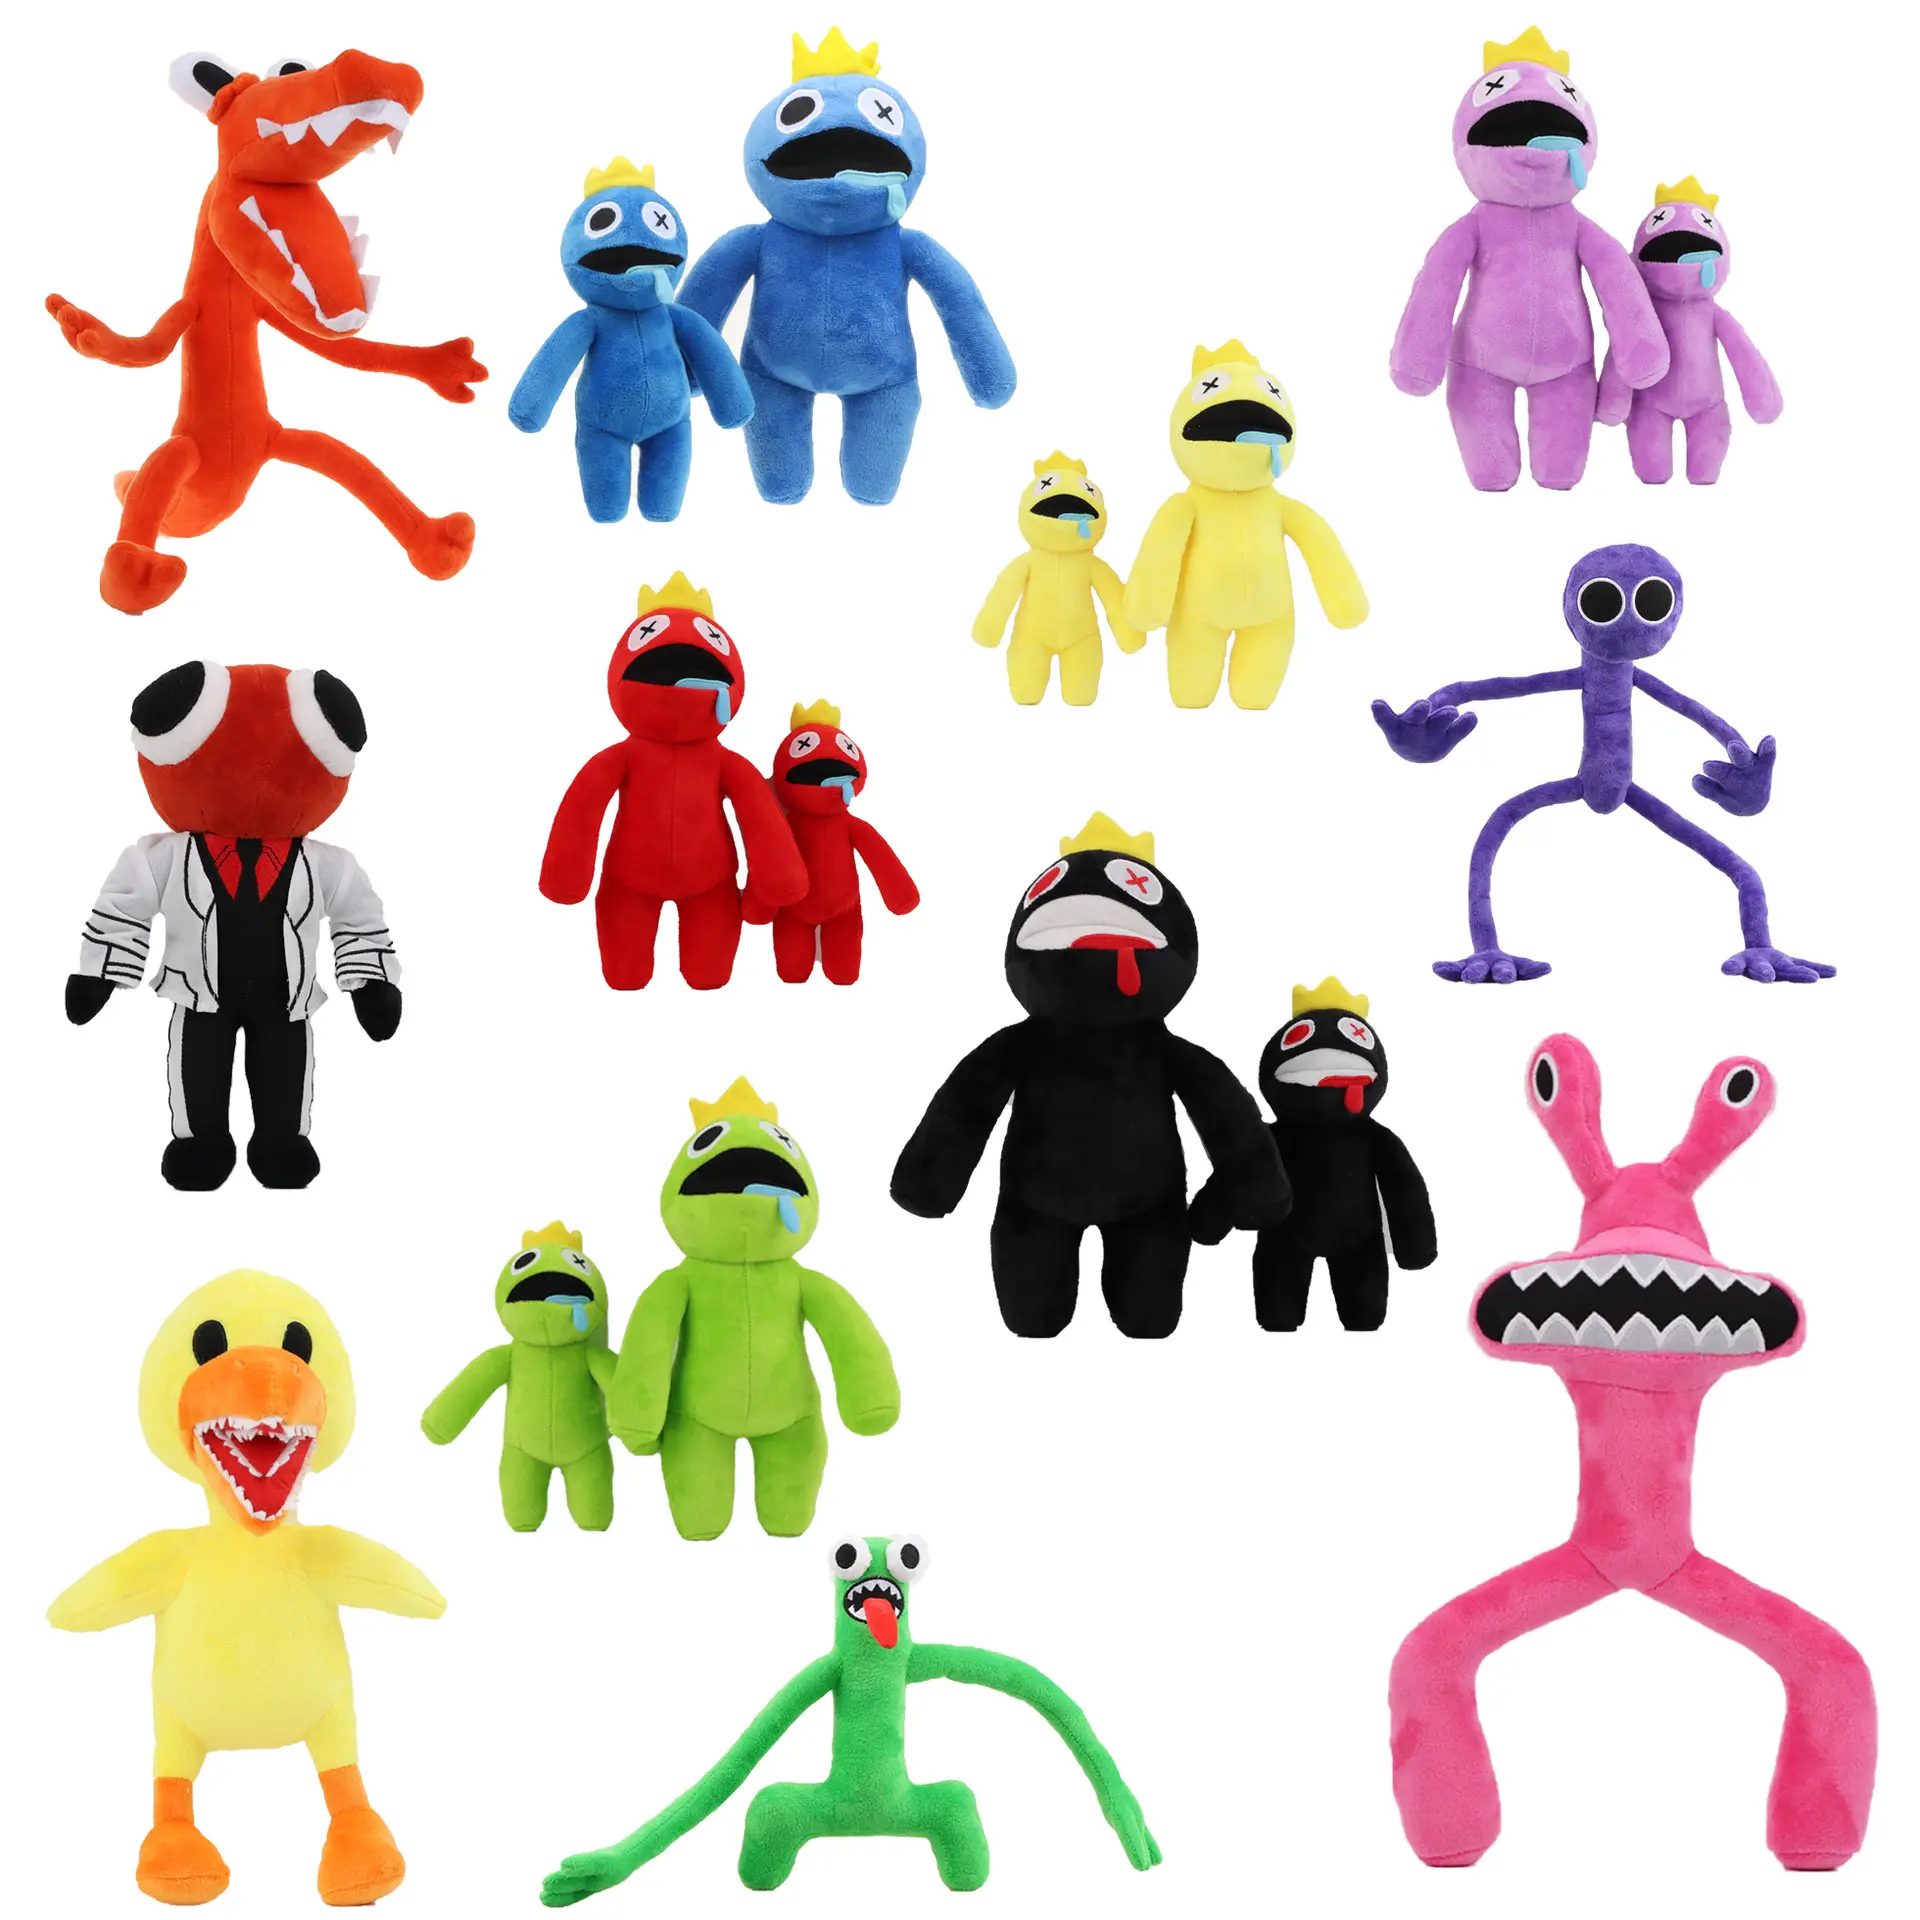 30cm Roblox Rainbow Friends Plush Toy Cartoon Game Character Doll Kawaii Blue Monster Soft Stuffed Animal Toys